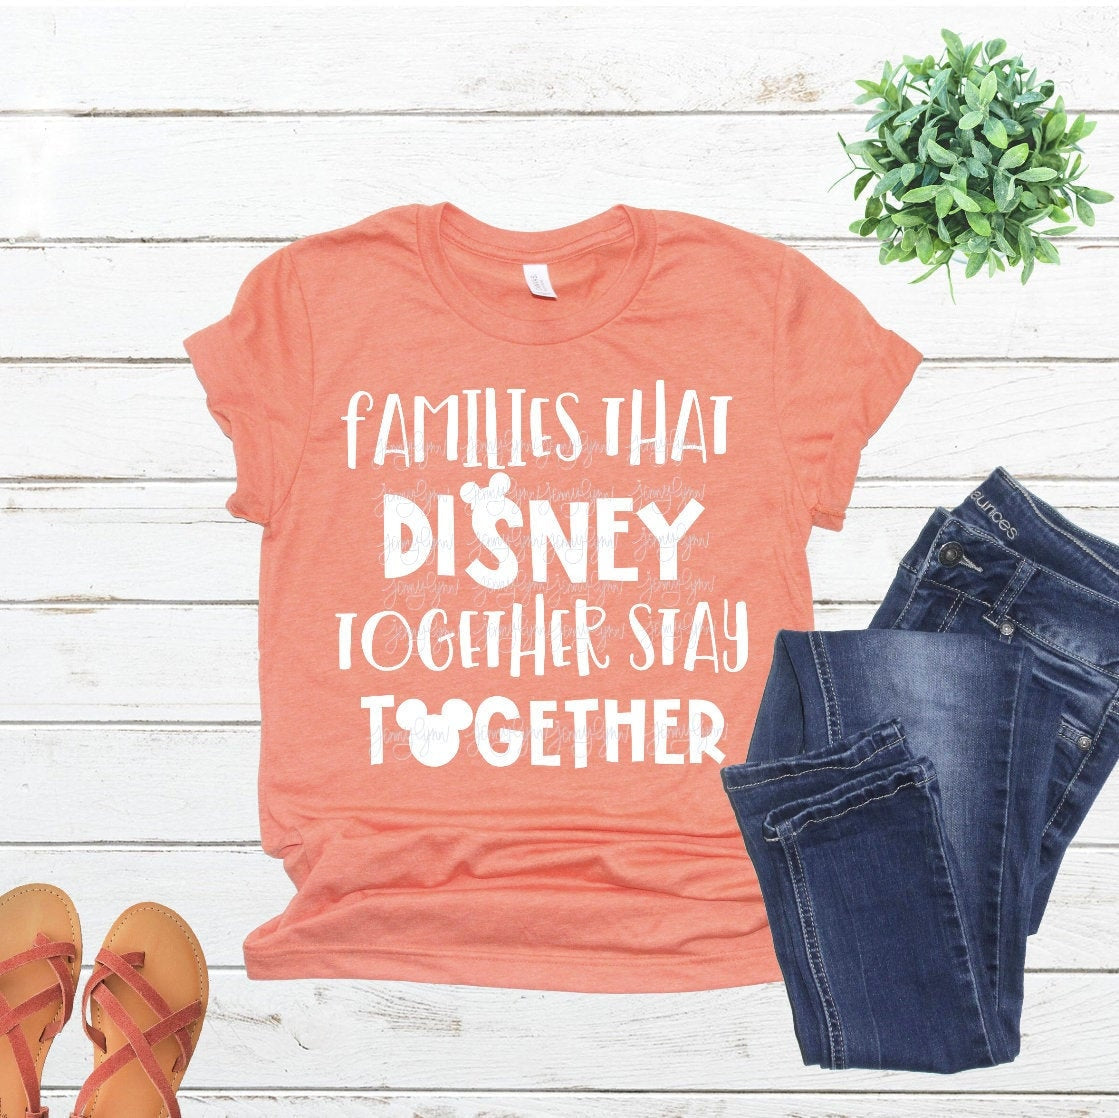 FamiliesThat DisneySVG Together Stay Together SVG Shirt PNG Cut File Iron On Shirt Cricut Vacation Shirt svg Friends Disneyland svg DXF png